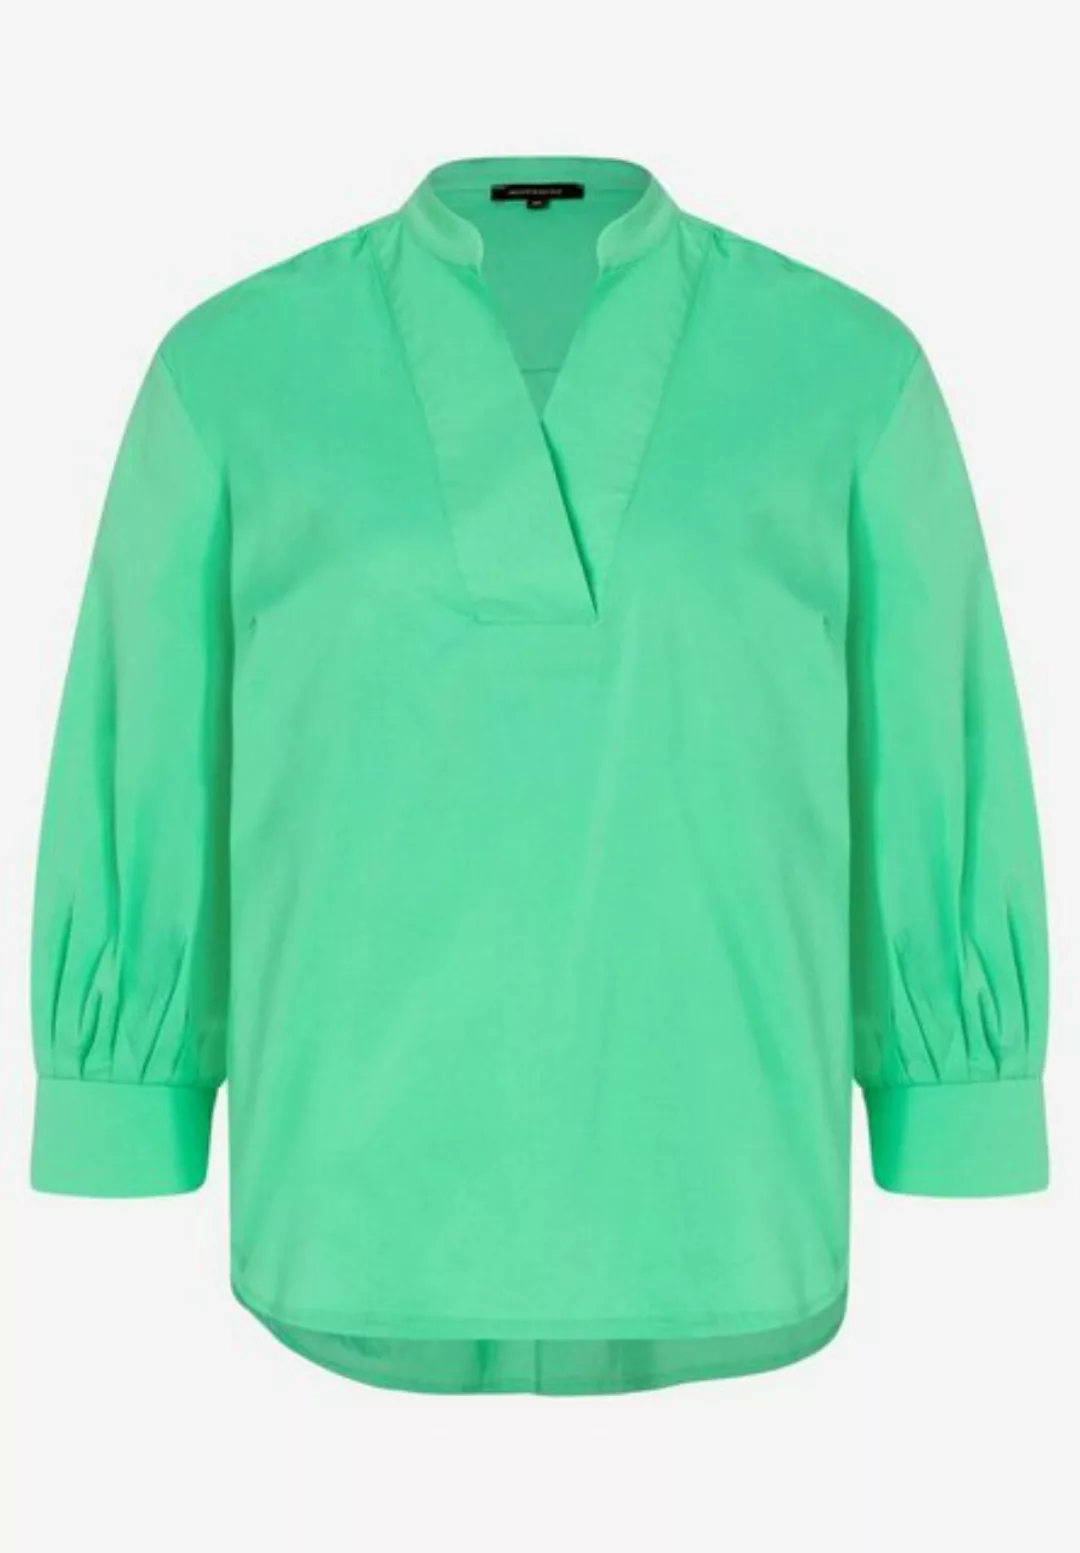 Baumwoll/Stretch Bluse, march green, Frühjahrs-Kollektion günstig online kaufen